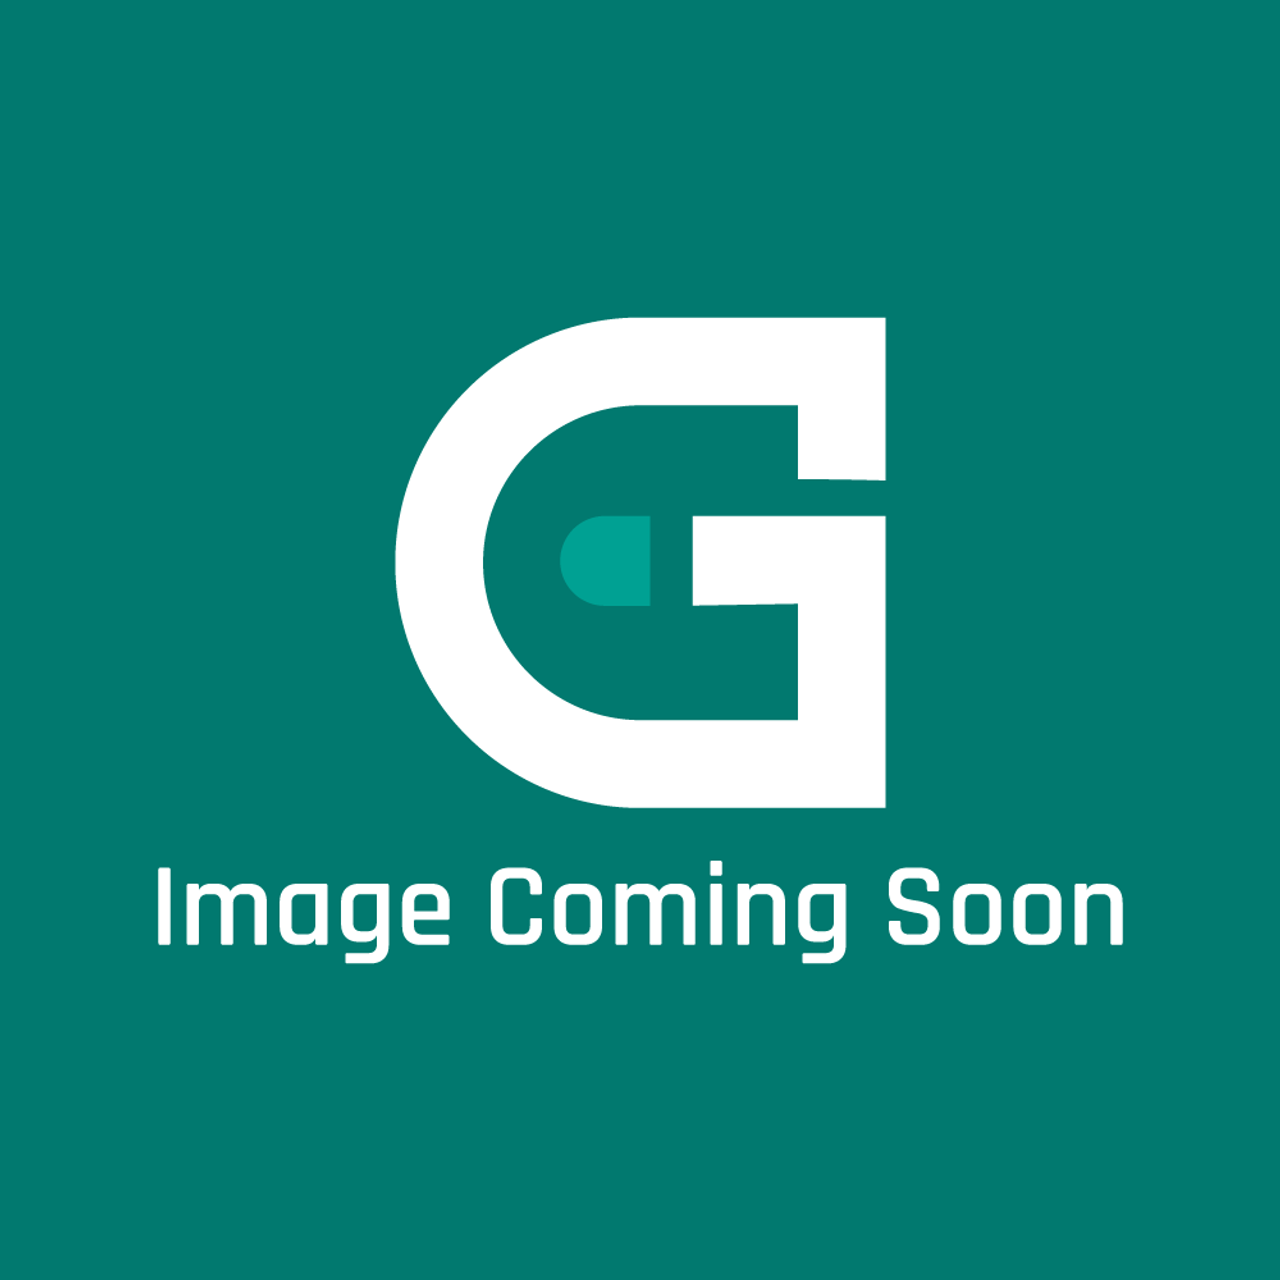 AGA Marvel A2255 - Gasket Perm.Af2000 2.3/16Sq Oc - Image Coming Soon!